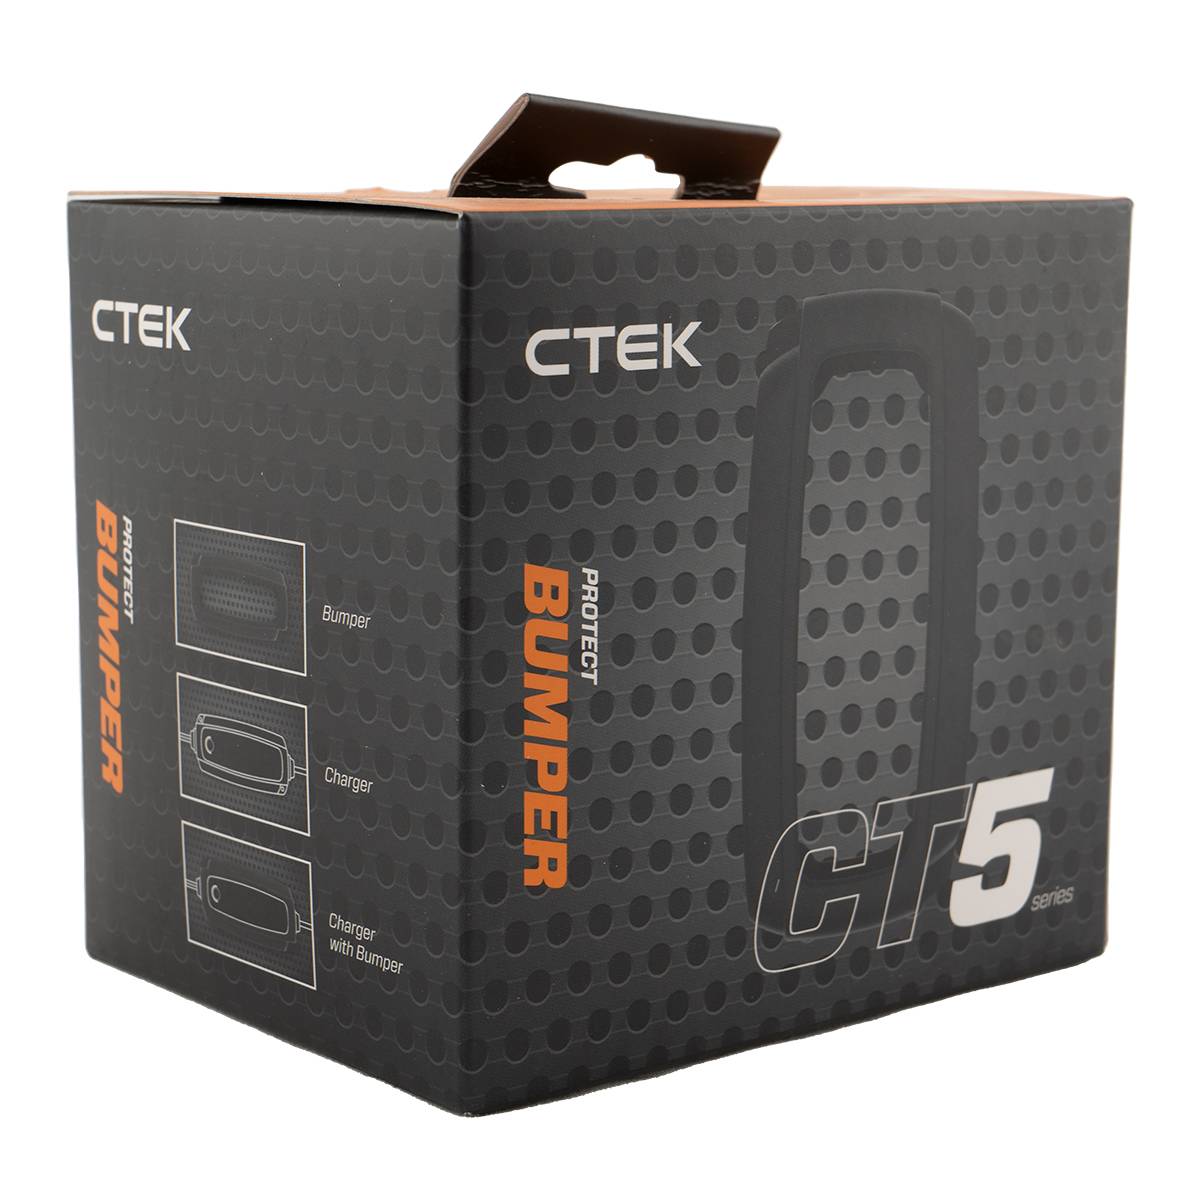 CTEK BUMPER CT5 Schutzhülle für Ladegeräte